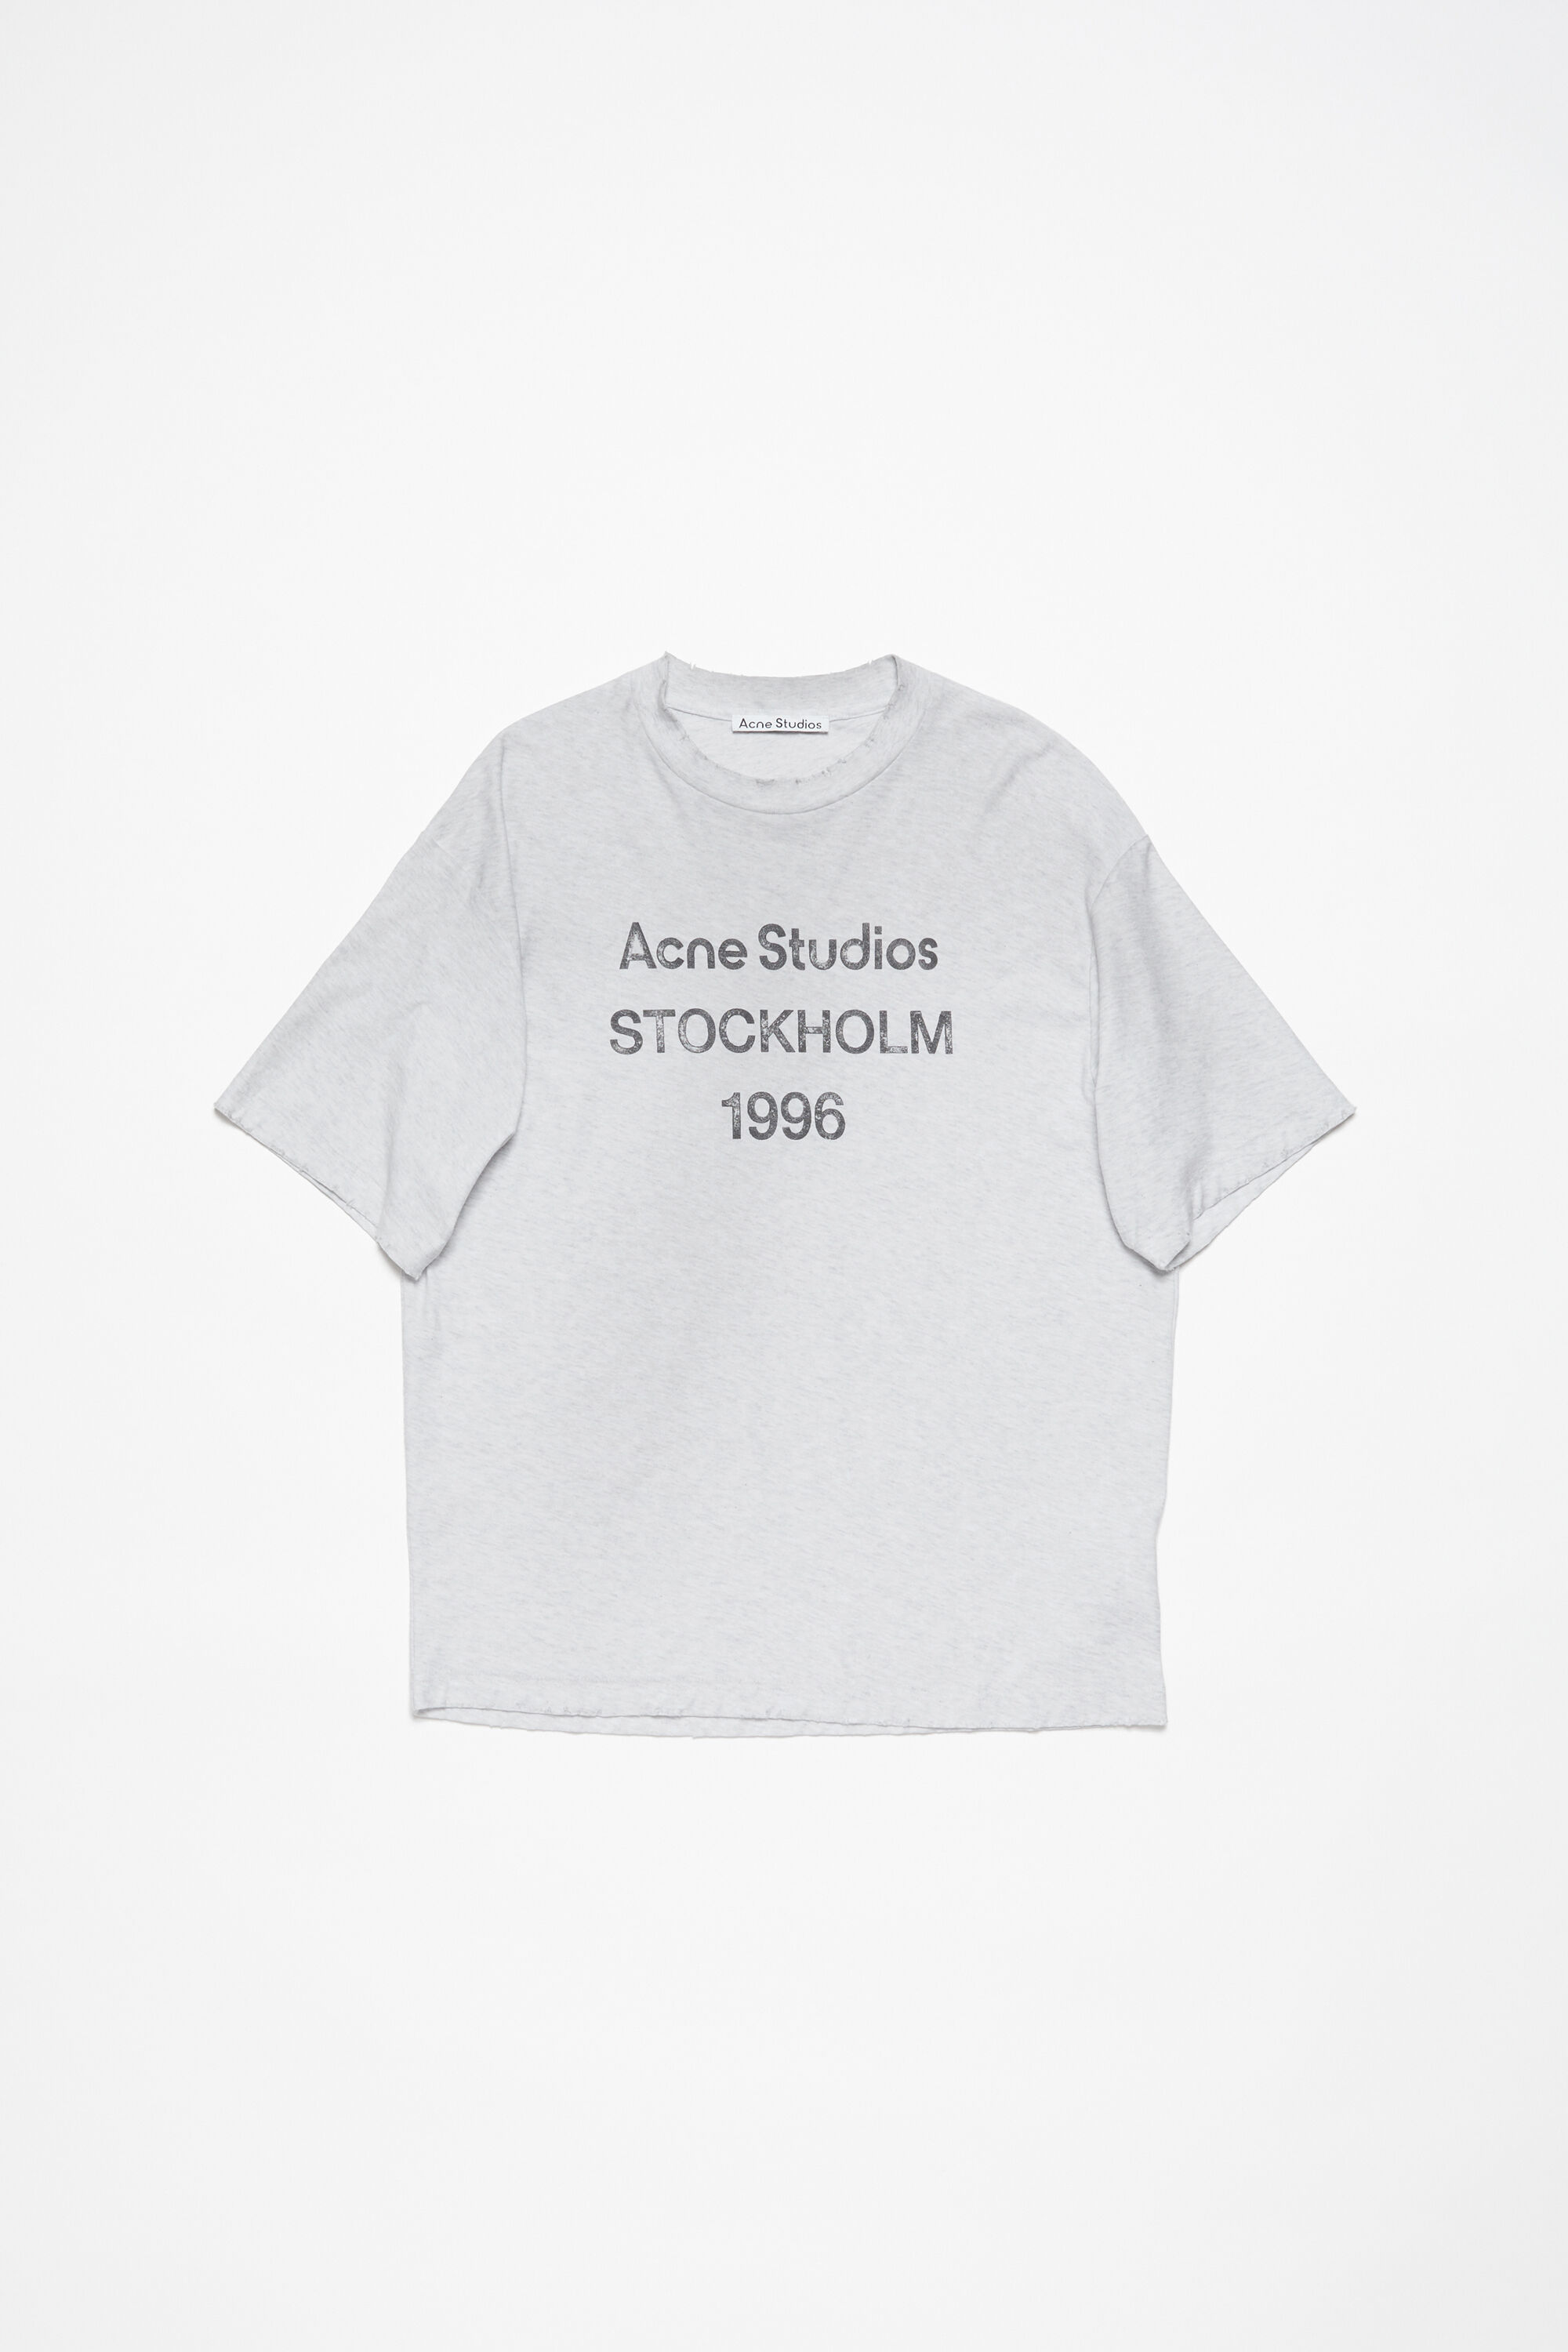 Acne Studios - Logo t-shirt - Relaxed fit - Pale Grey Melange